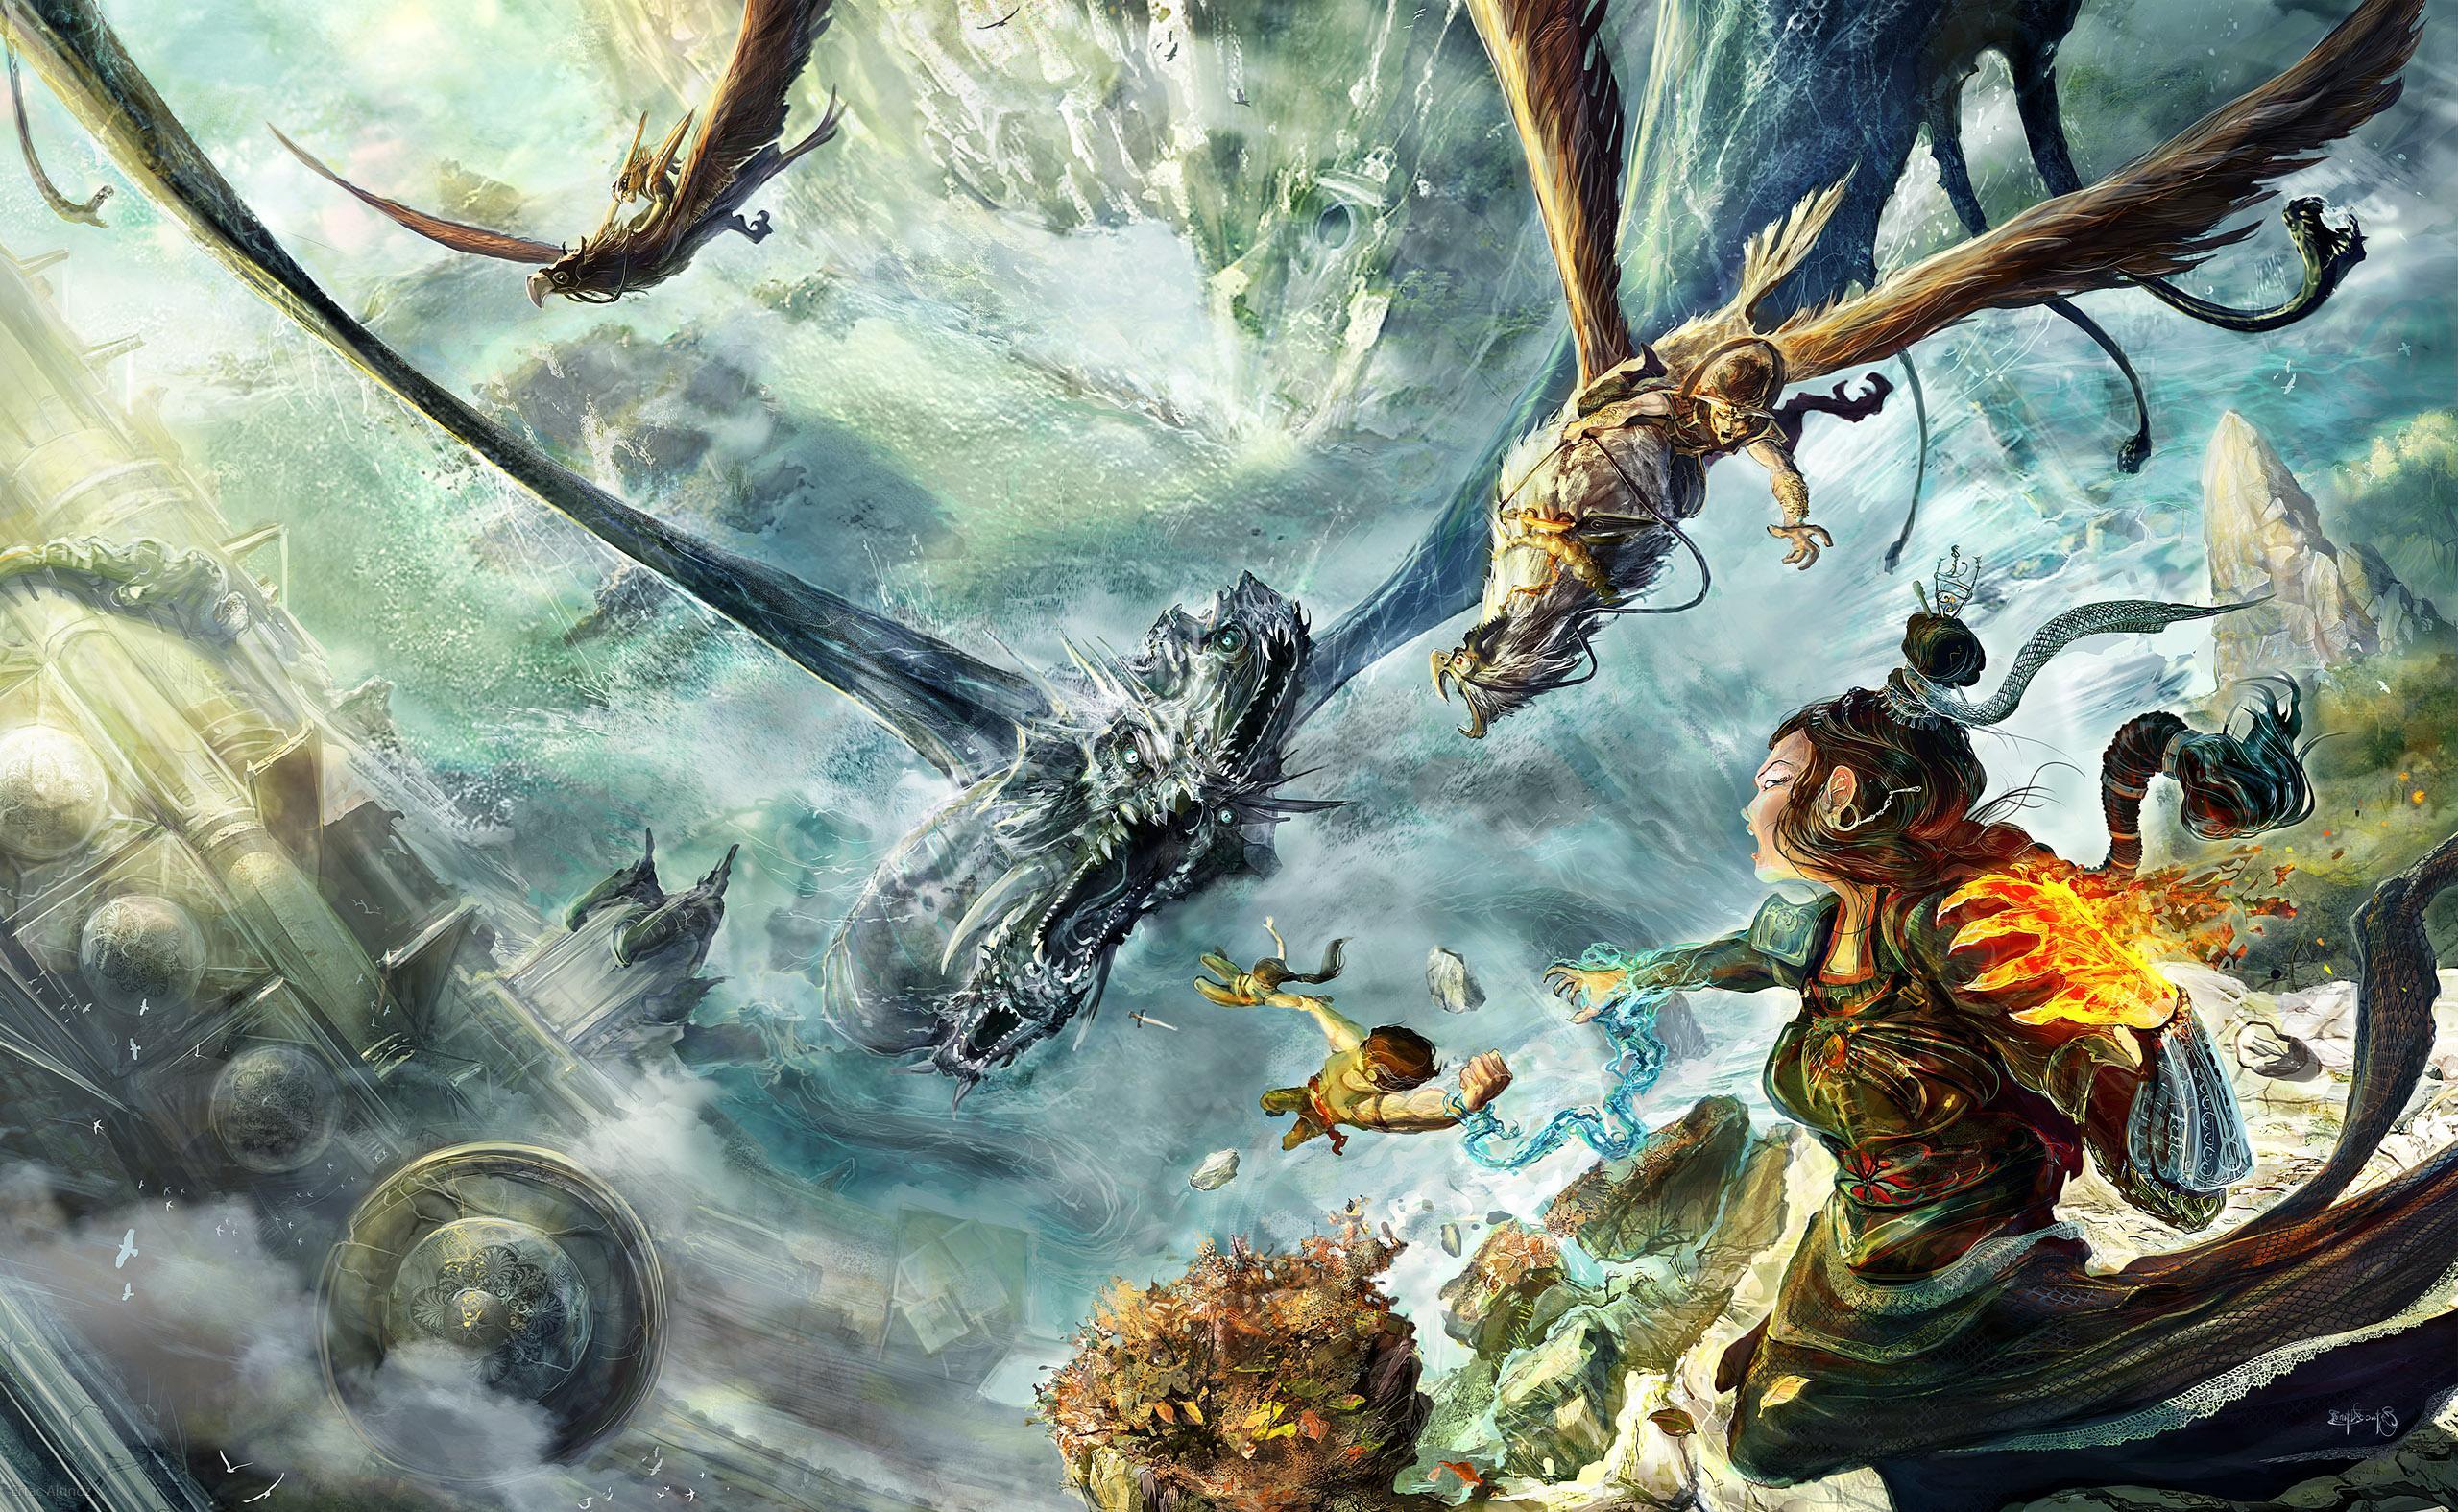 Fantasy battle scene: a stunning desktop wallpaper by ertac altinoz.